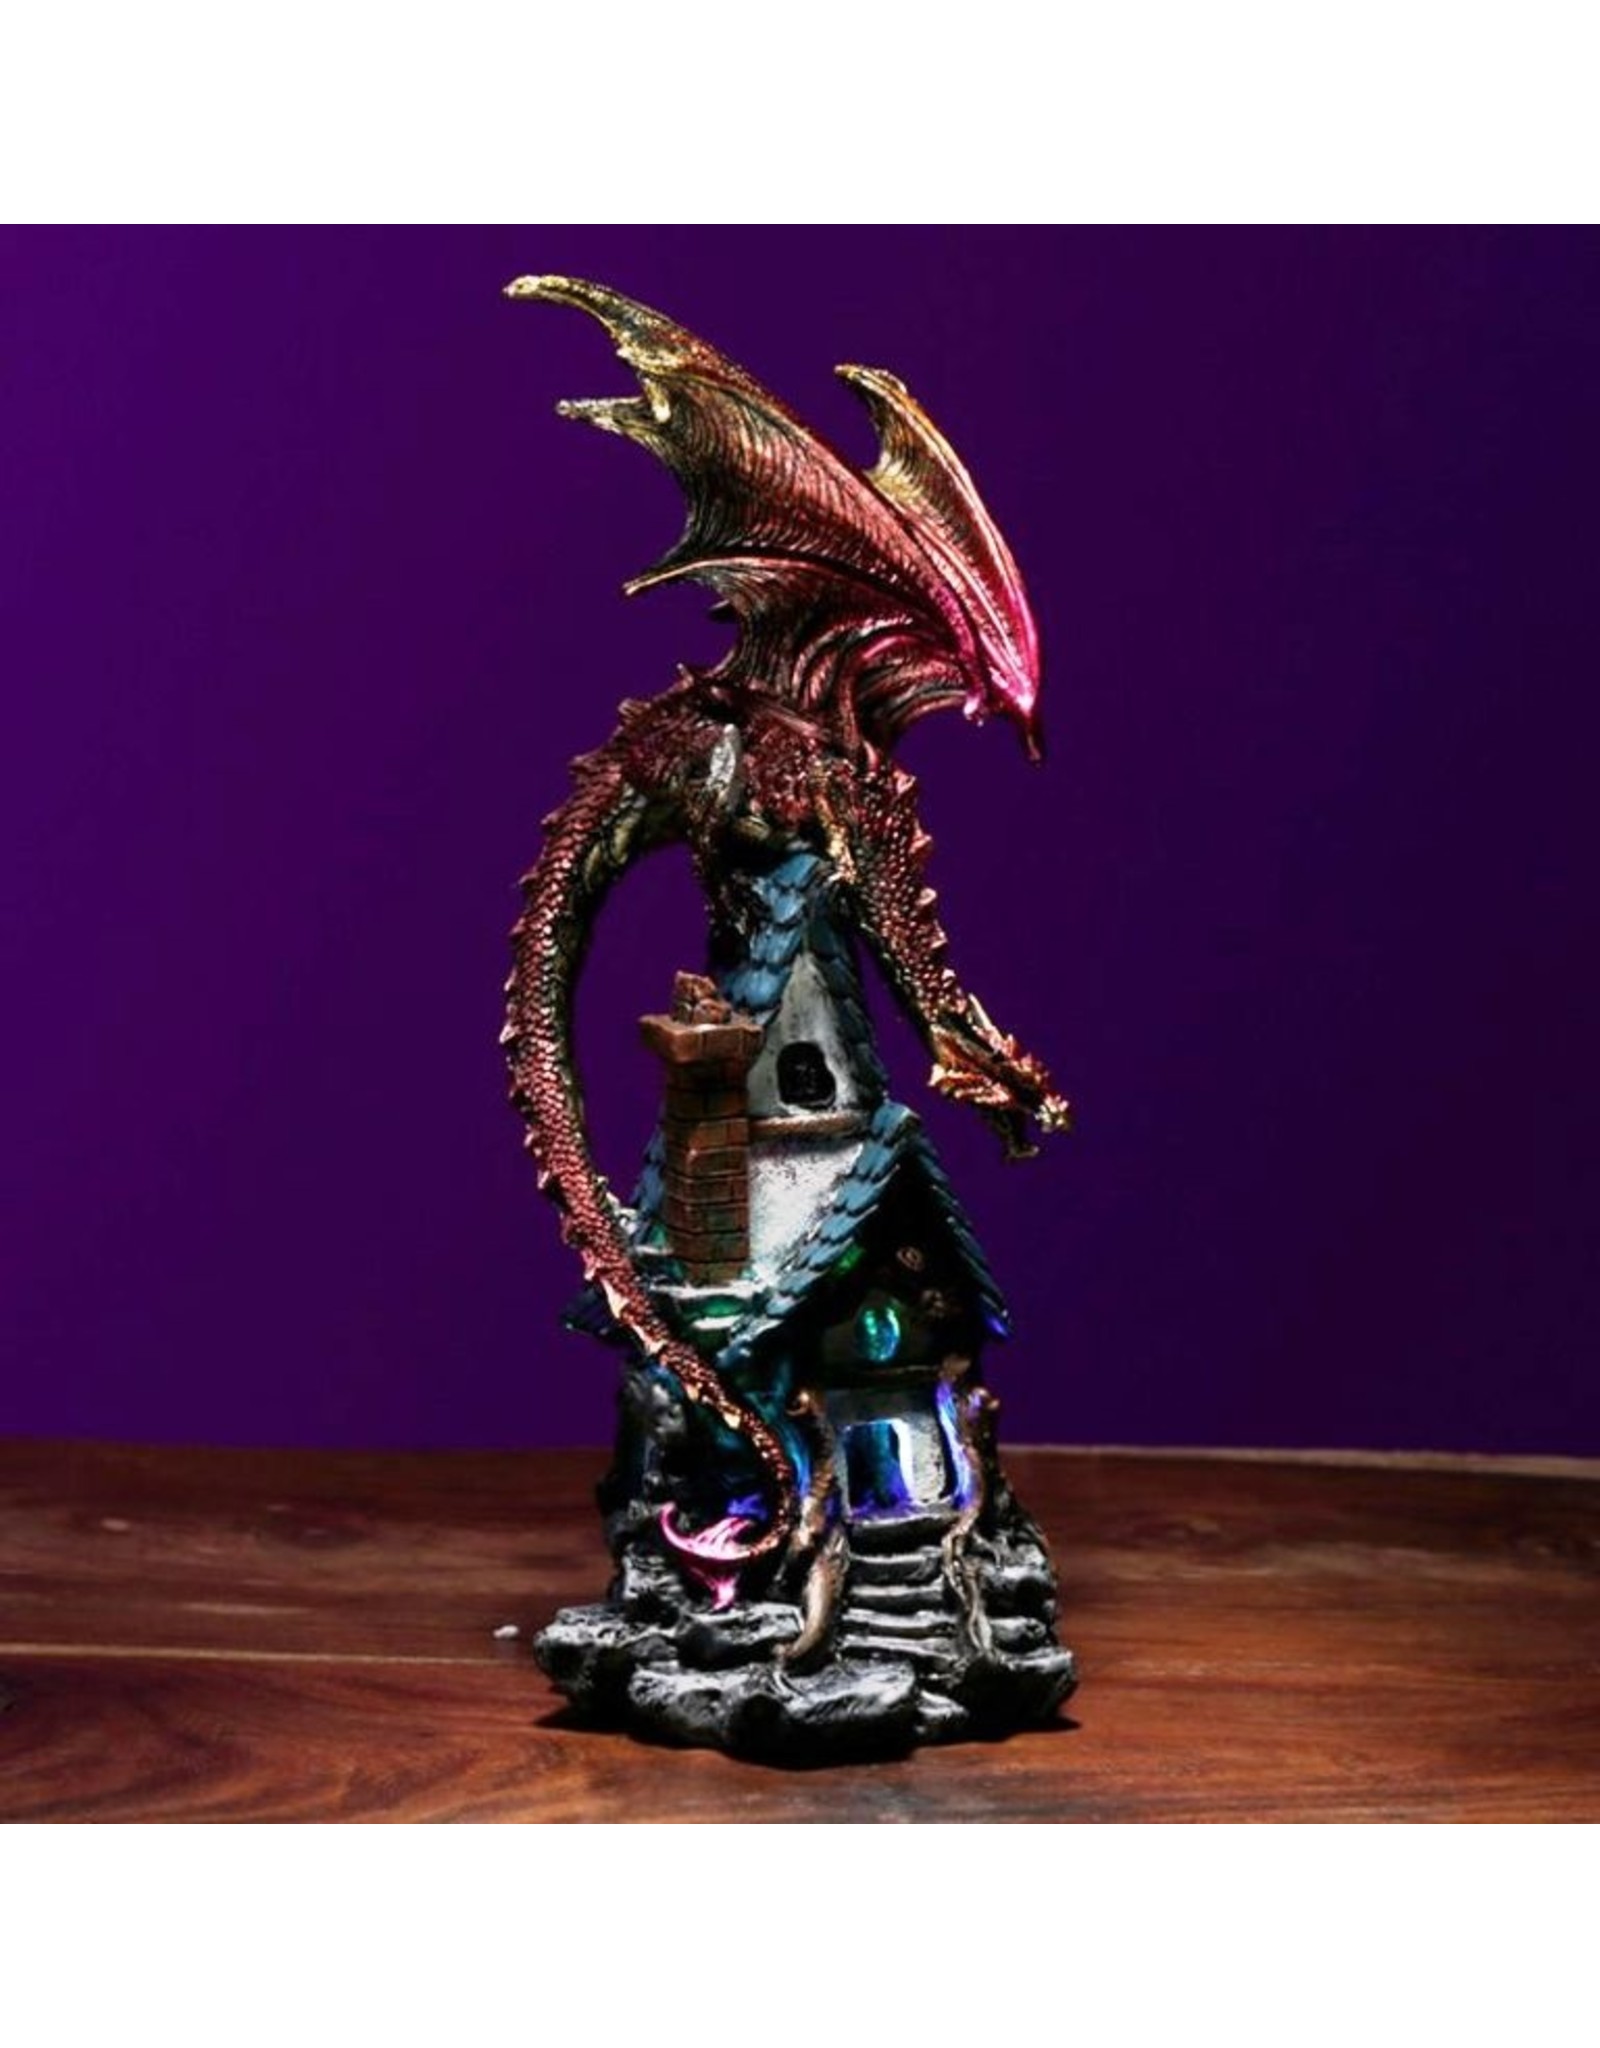 Trukado Giftware Figurines Collectables - Dark Legends Forest Spirit Dragon LED